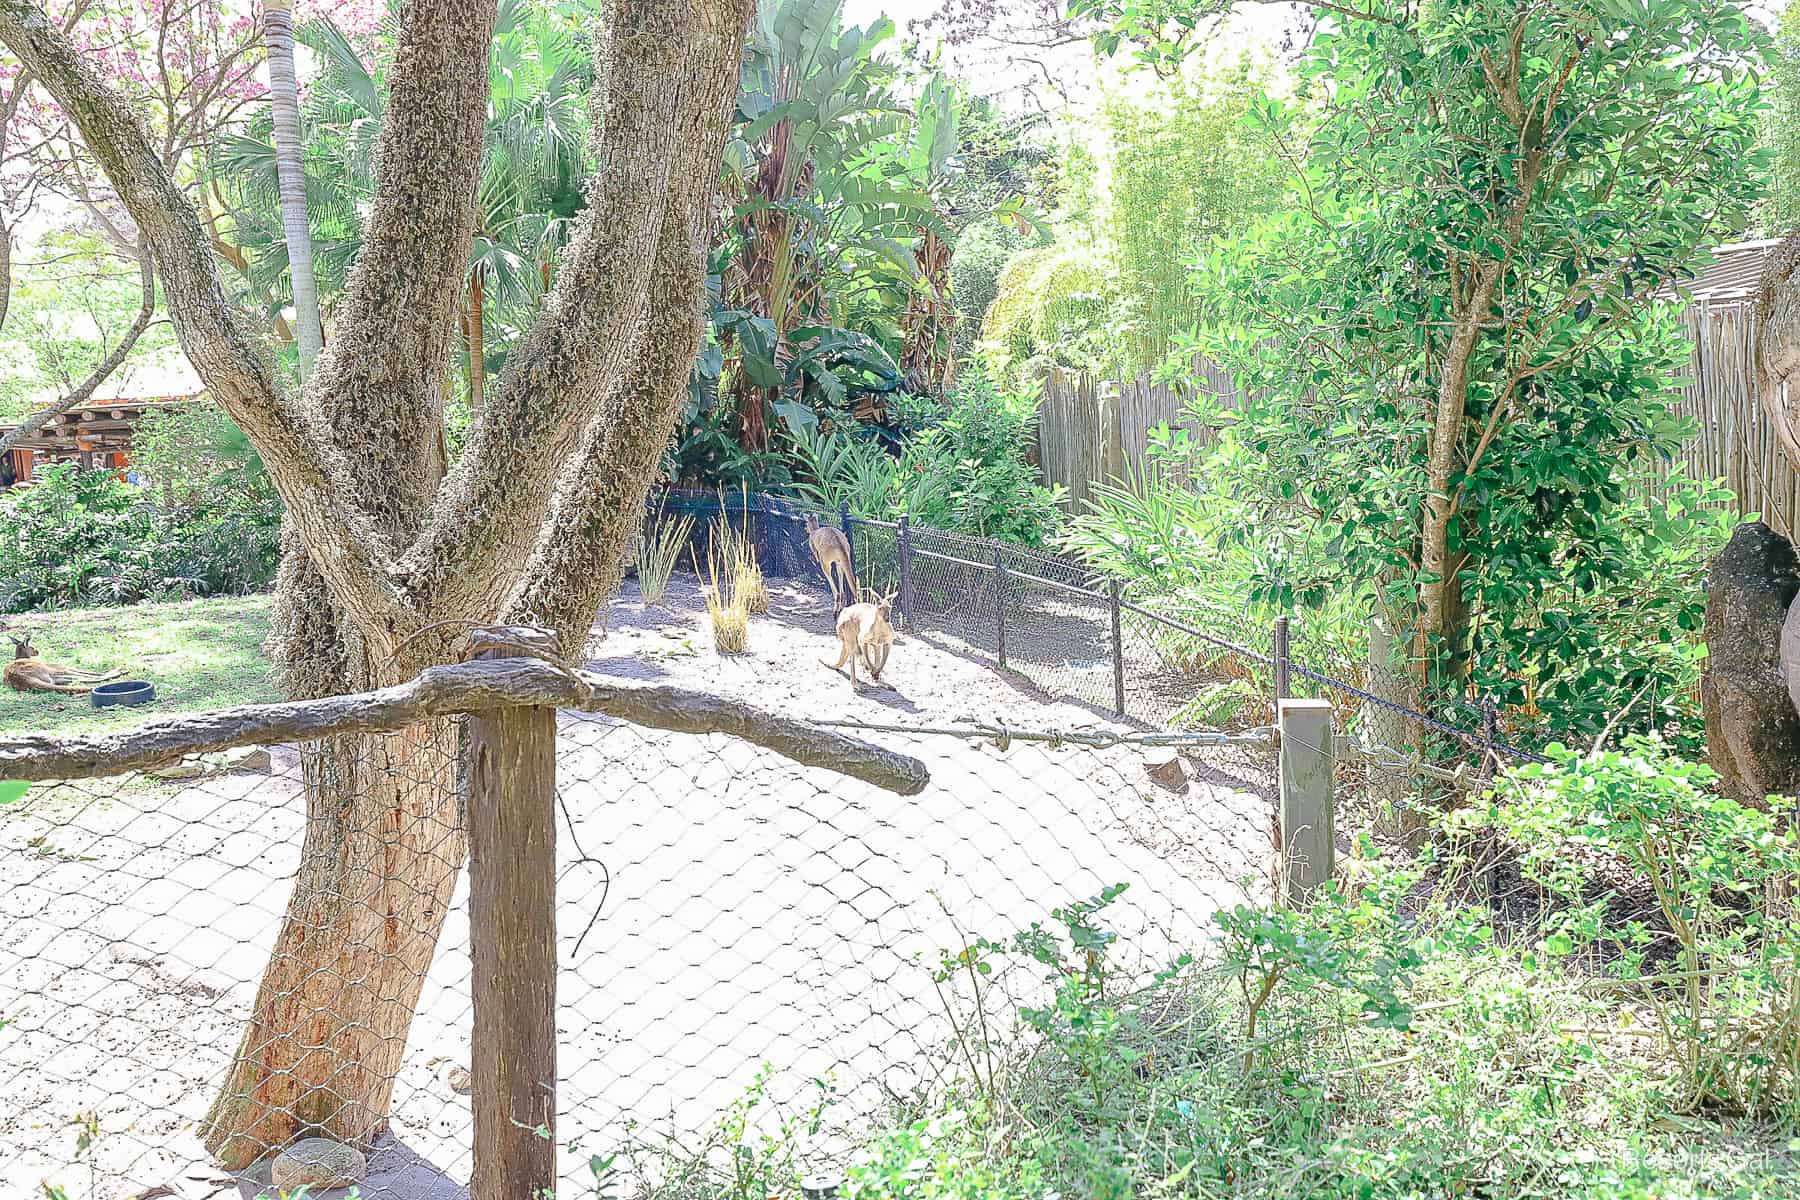 a red kangaroo in an animal enclosure at the base of the Tree of Life at Disney's Animal Kingdom 